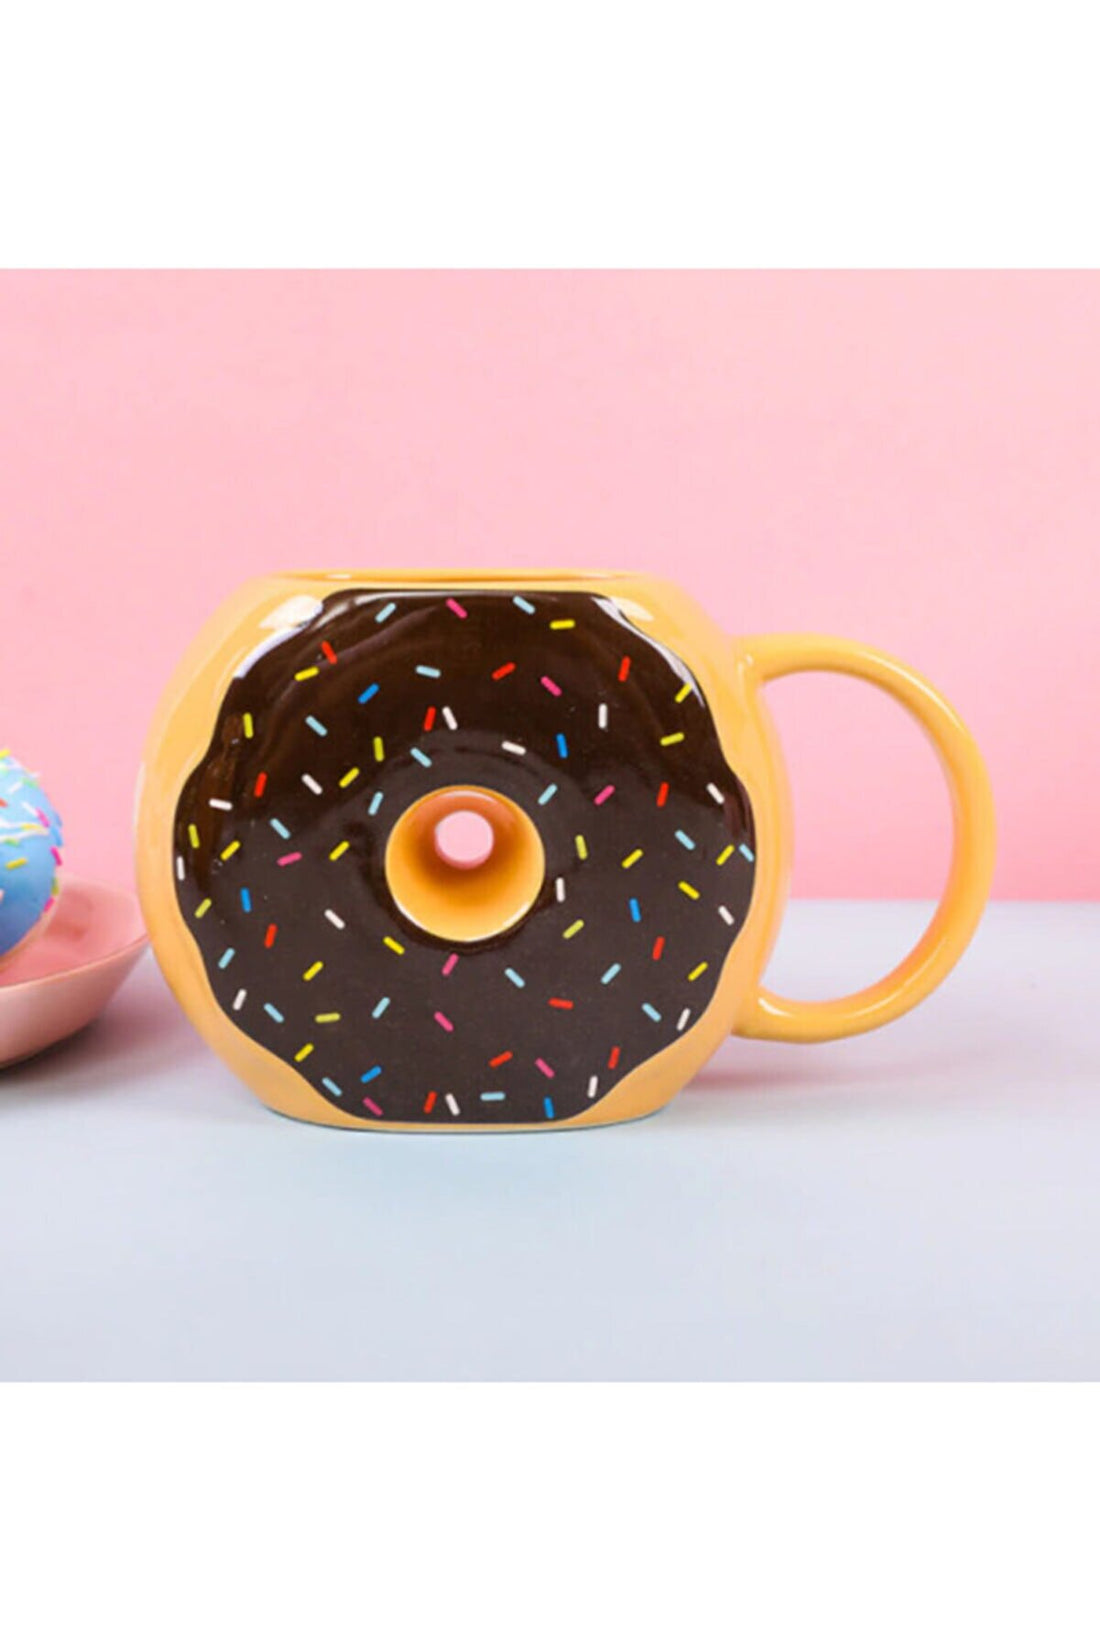 Donut Porselen 3D Tasarım Kupa Bardak